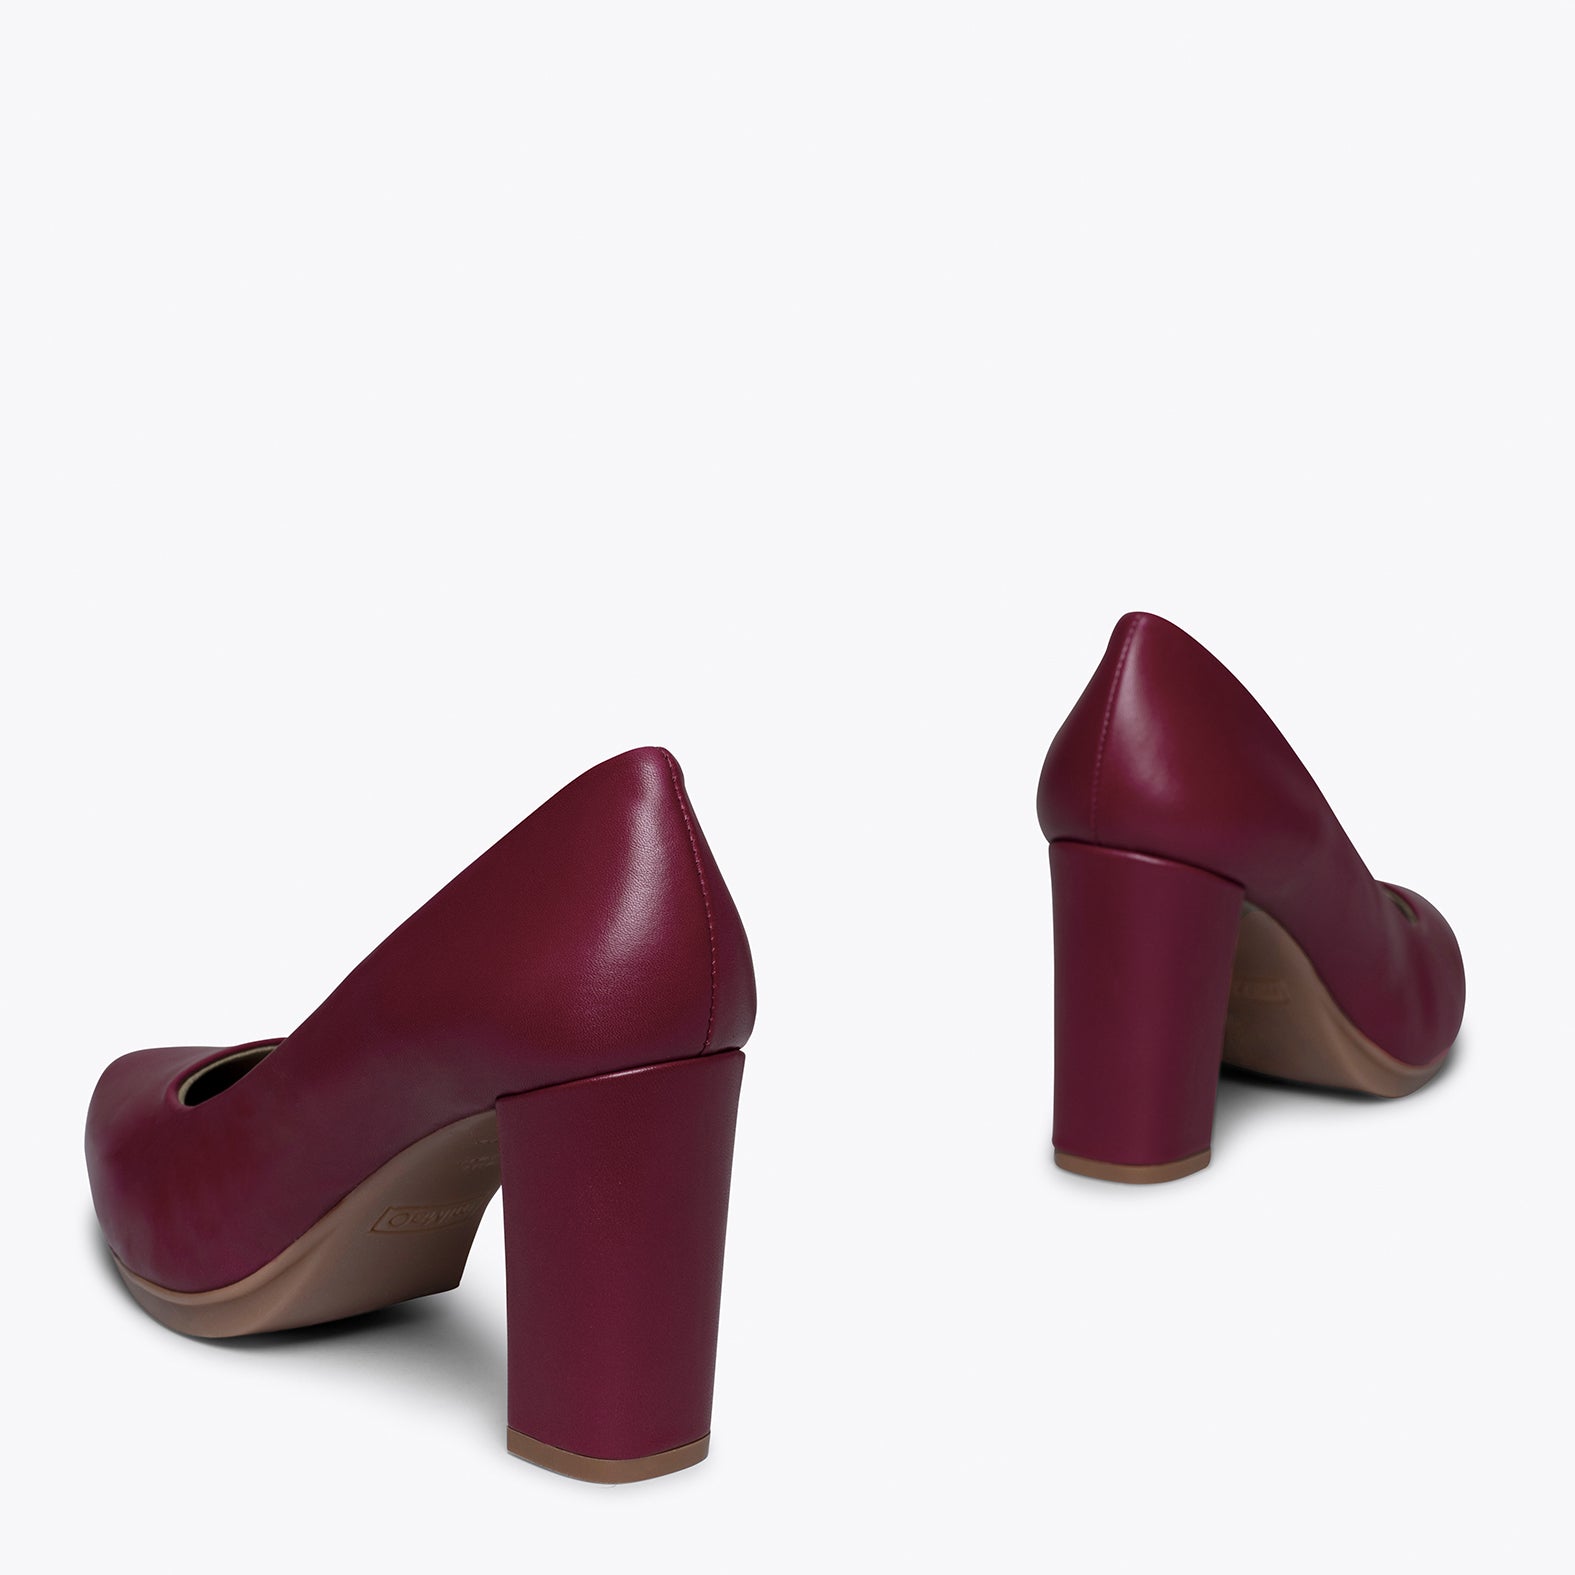 URBAN SALON - RED high heel